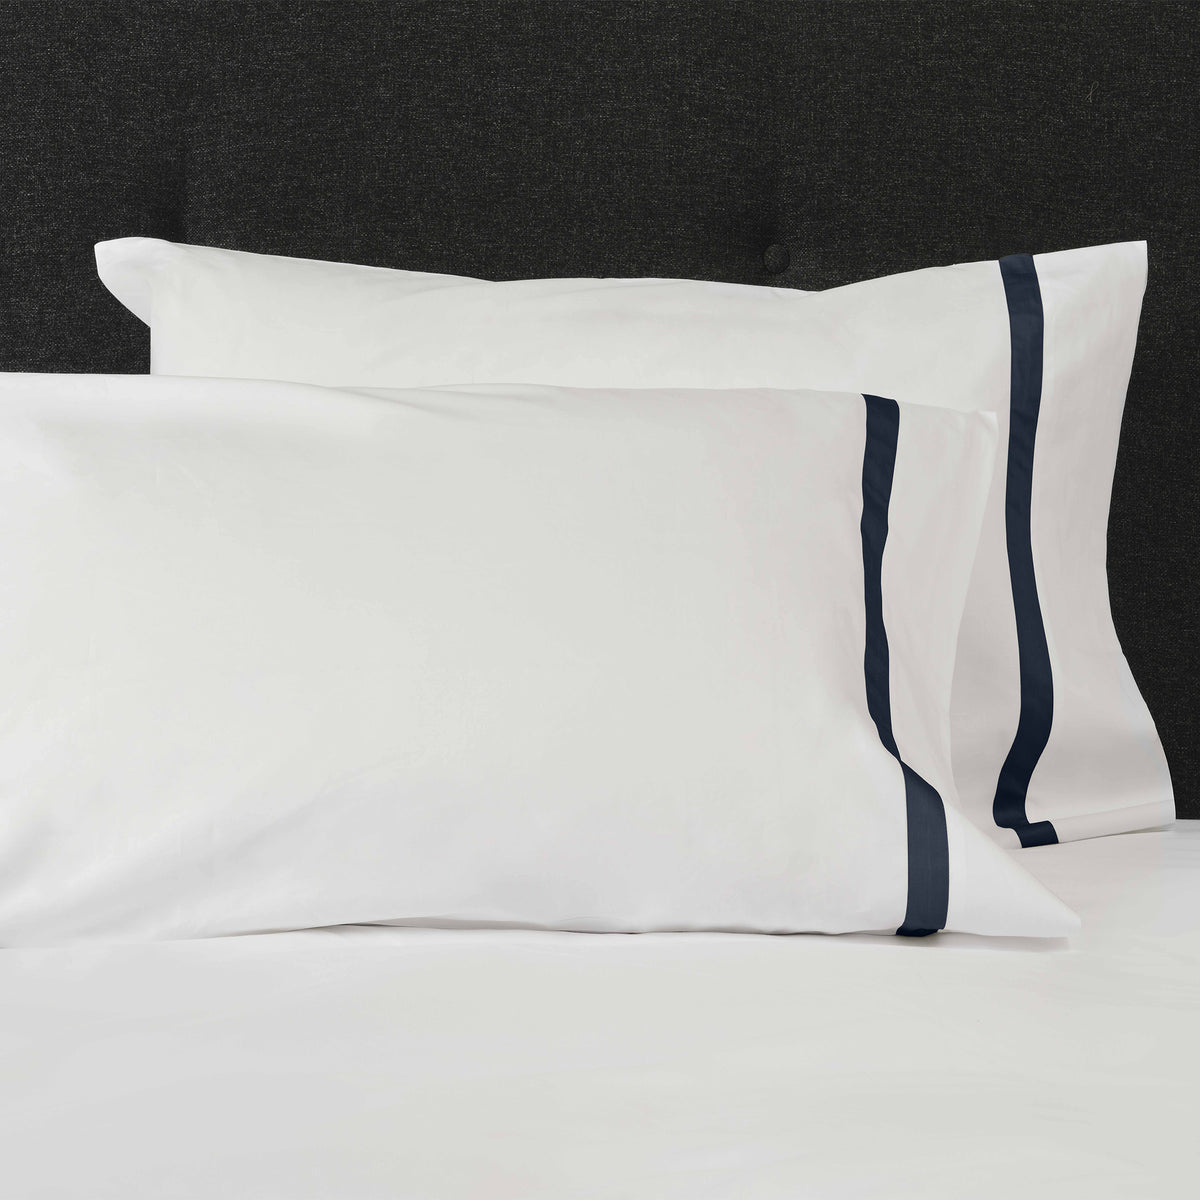 Pair of Pillowcases of Signoria Pegaso Bedding in White/Dark Blue Color